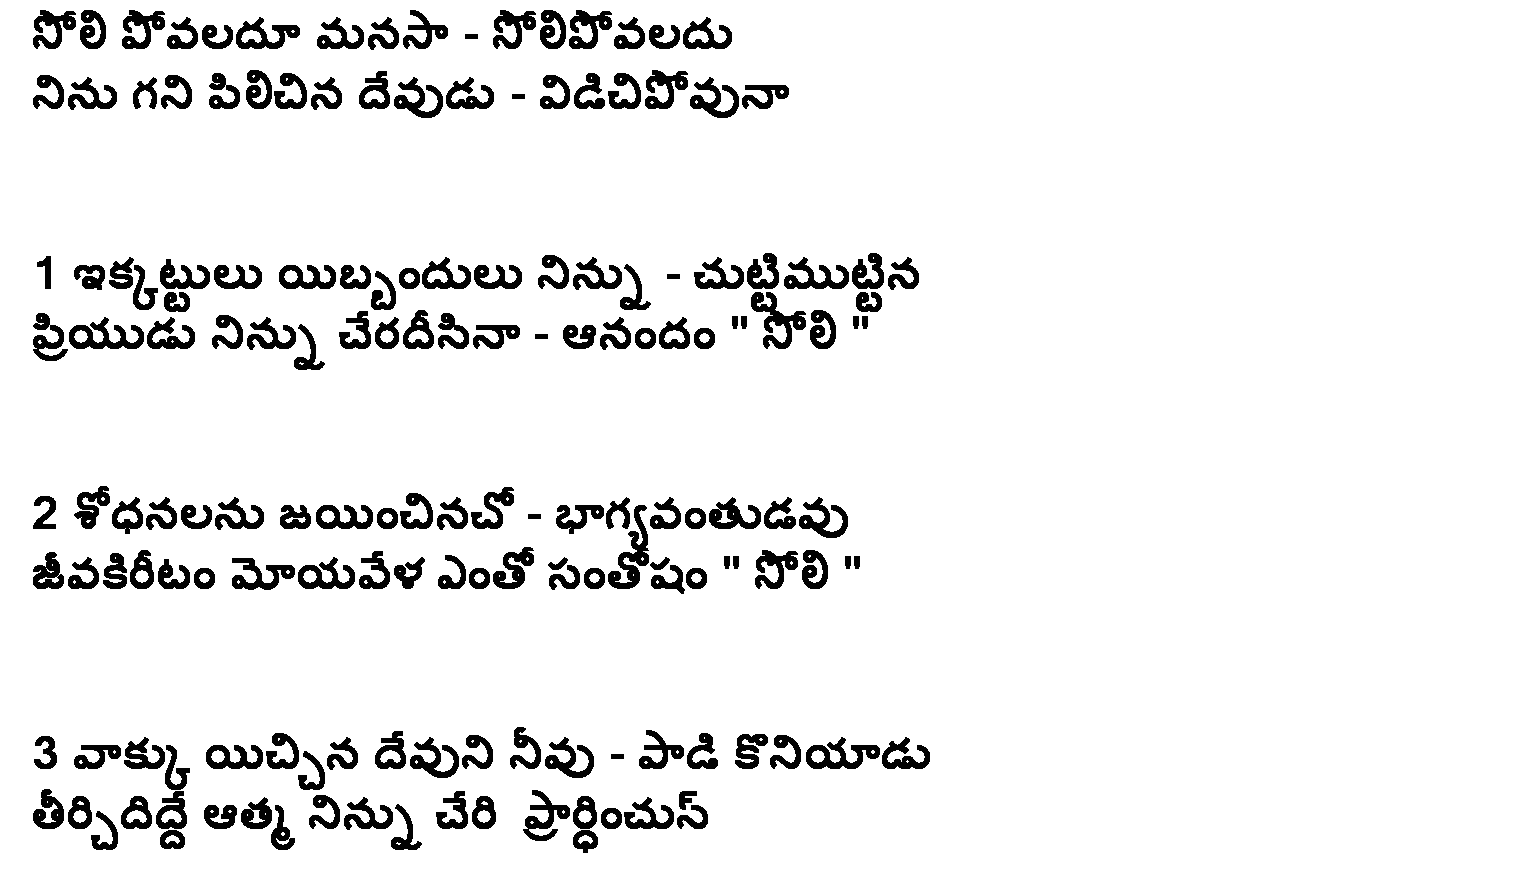 Solipovaladu manasa song lyrics in telugu